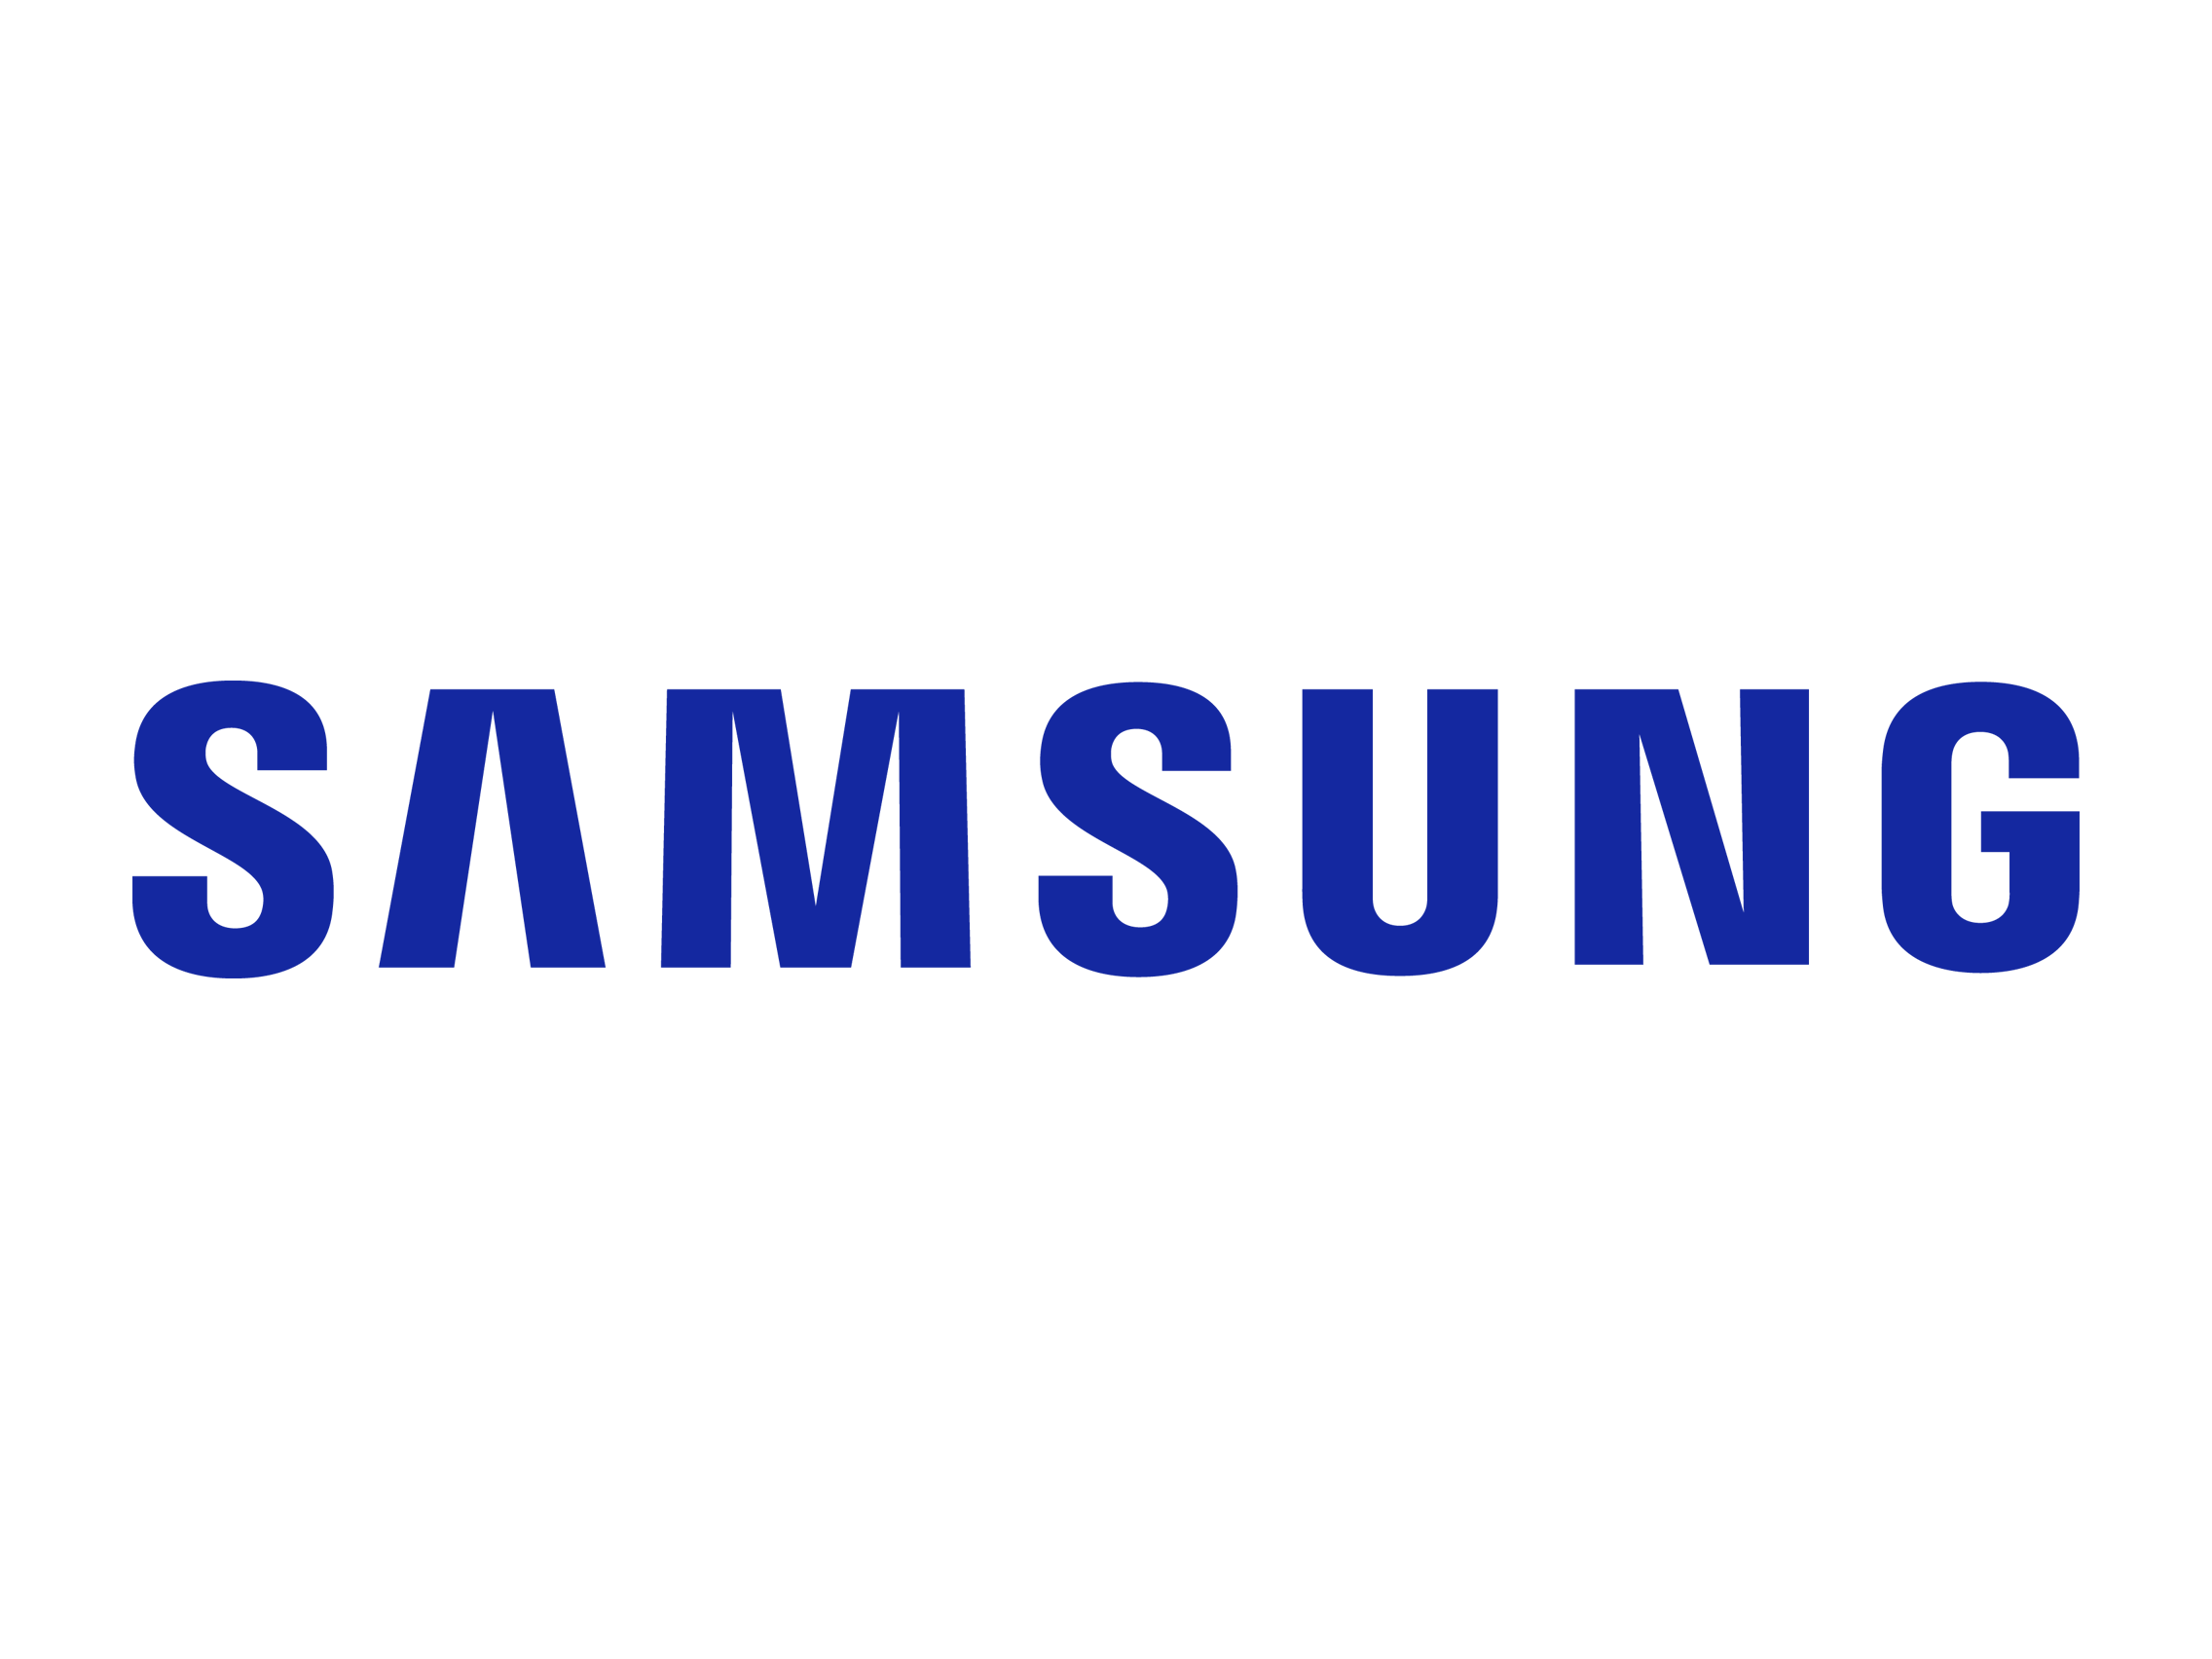 Блок проявки Samsung оригинал для Samsung SL-X7400/7500/7600, голубой (JC96-12519A)